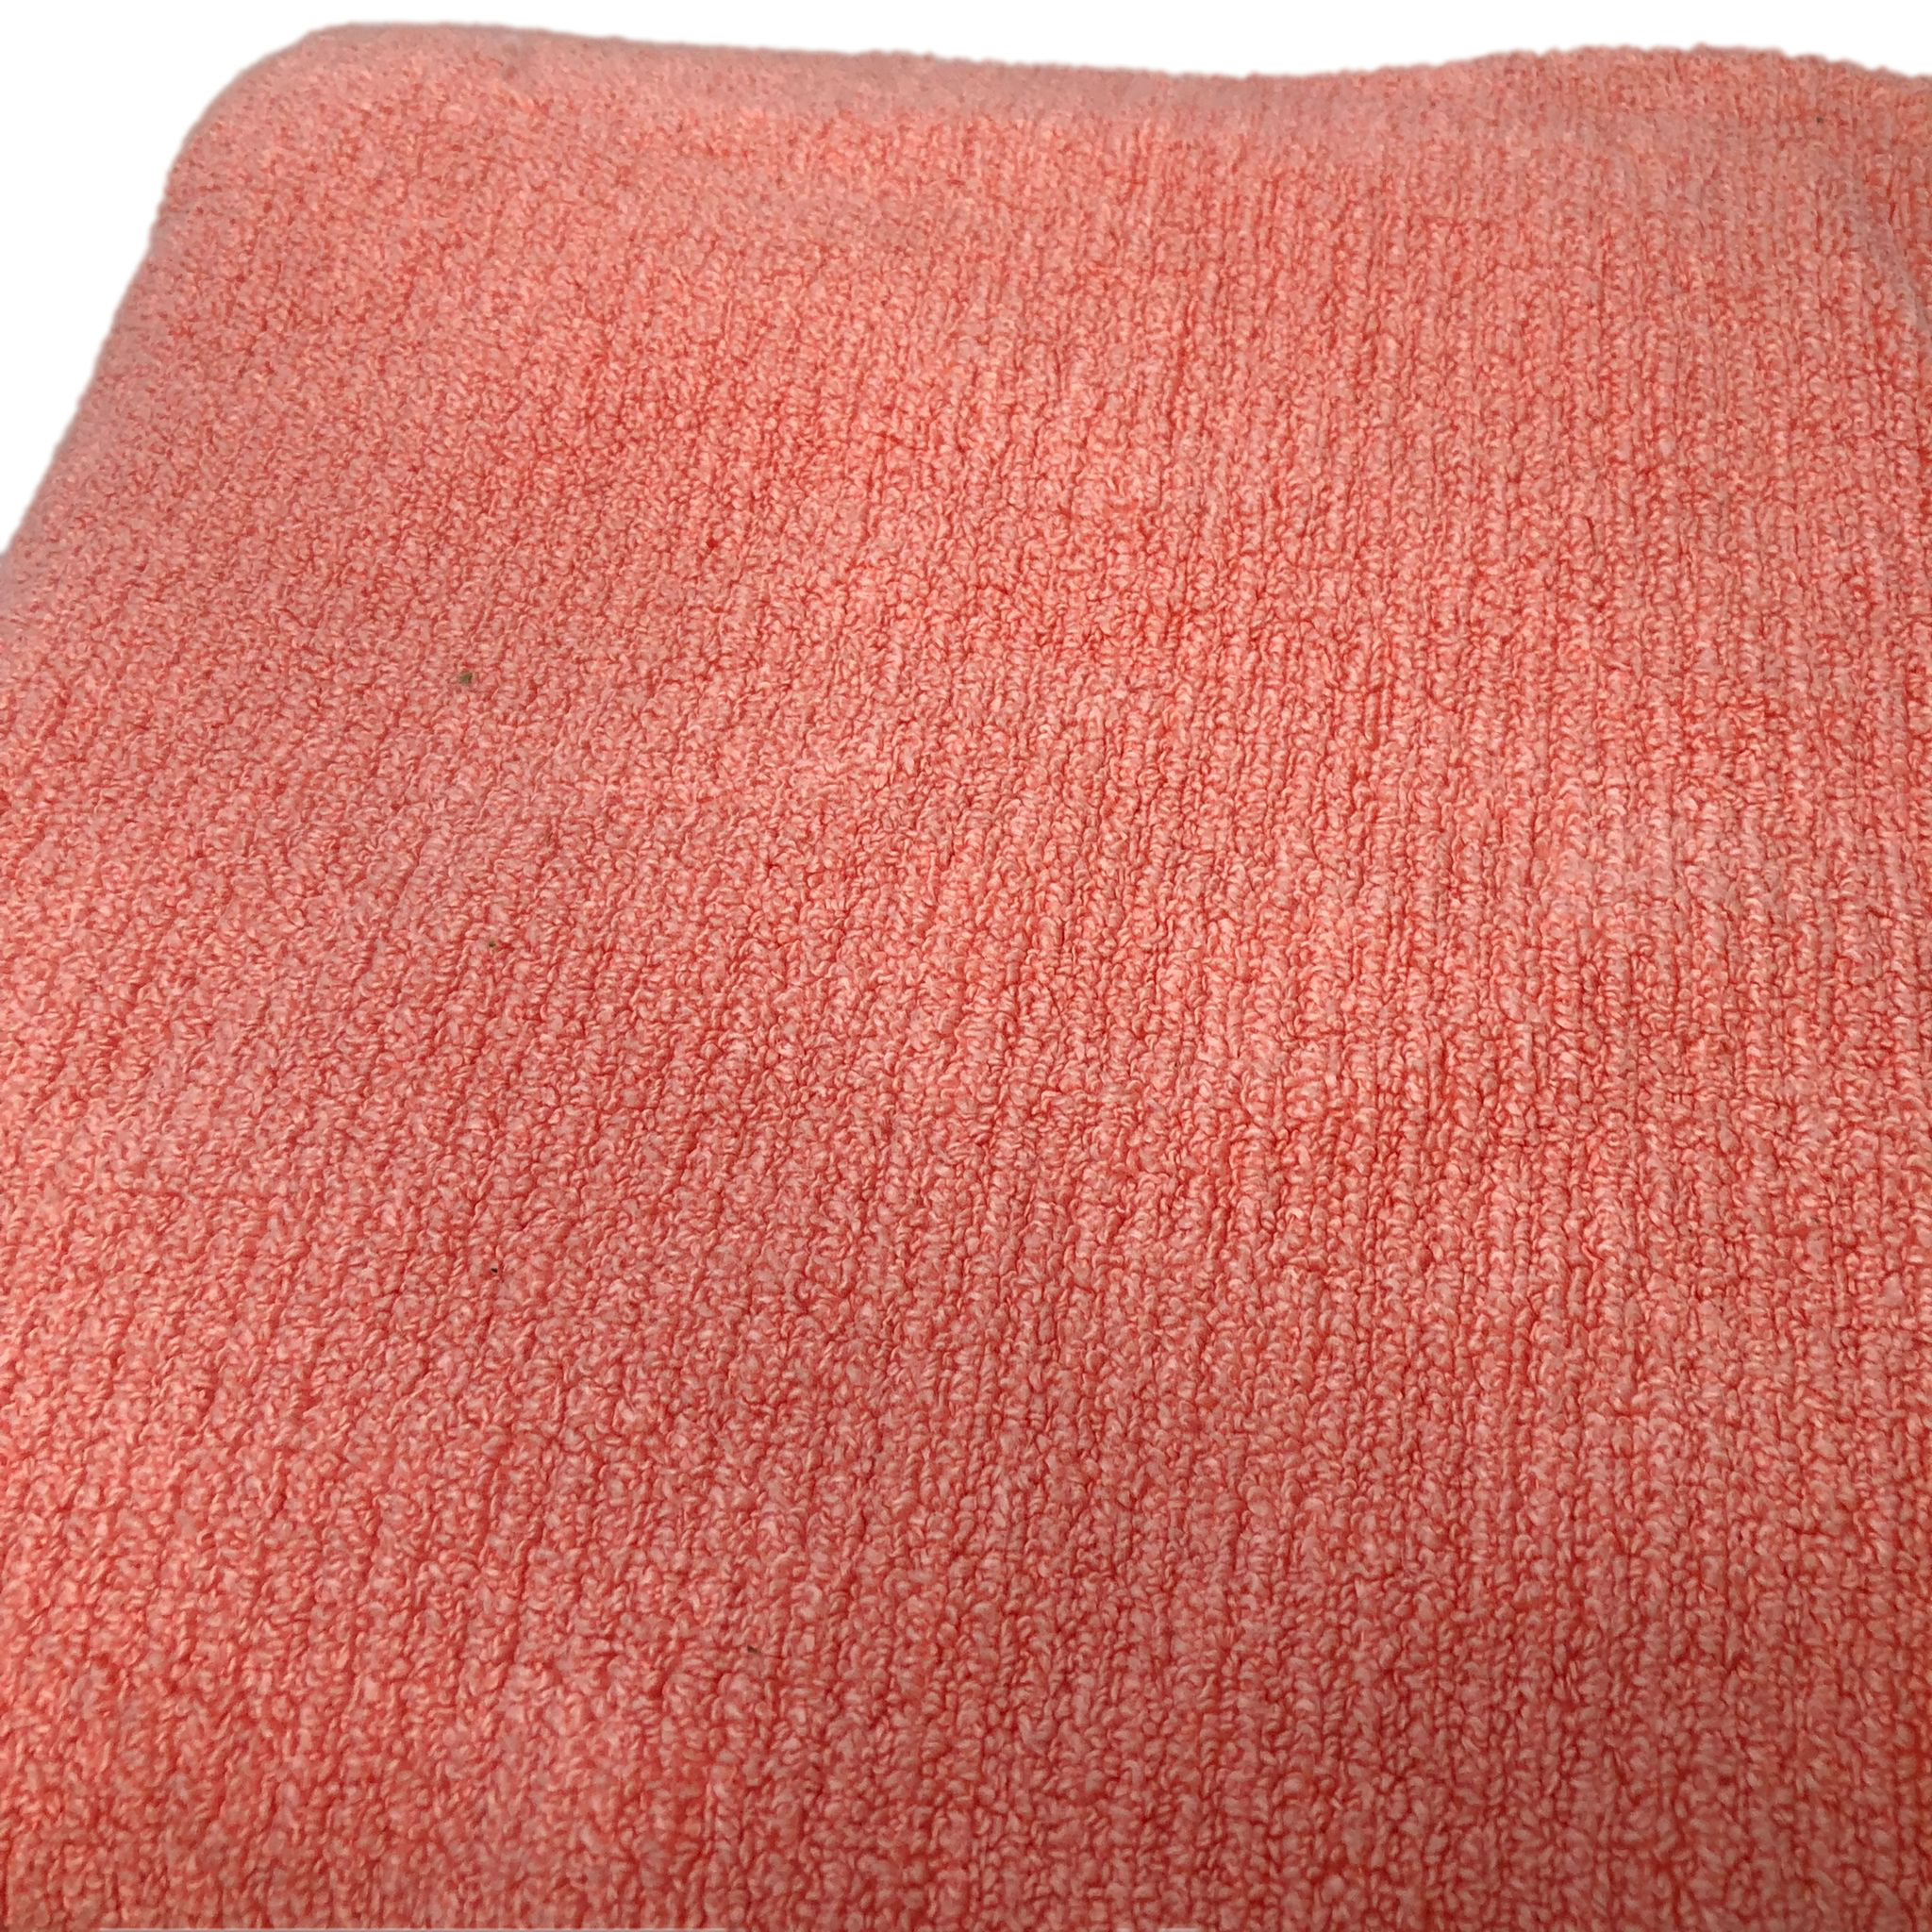 Threadable Textured Bath Towel - Soft, Absorbent, 100% Cotton